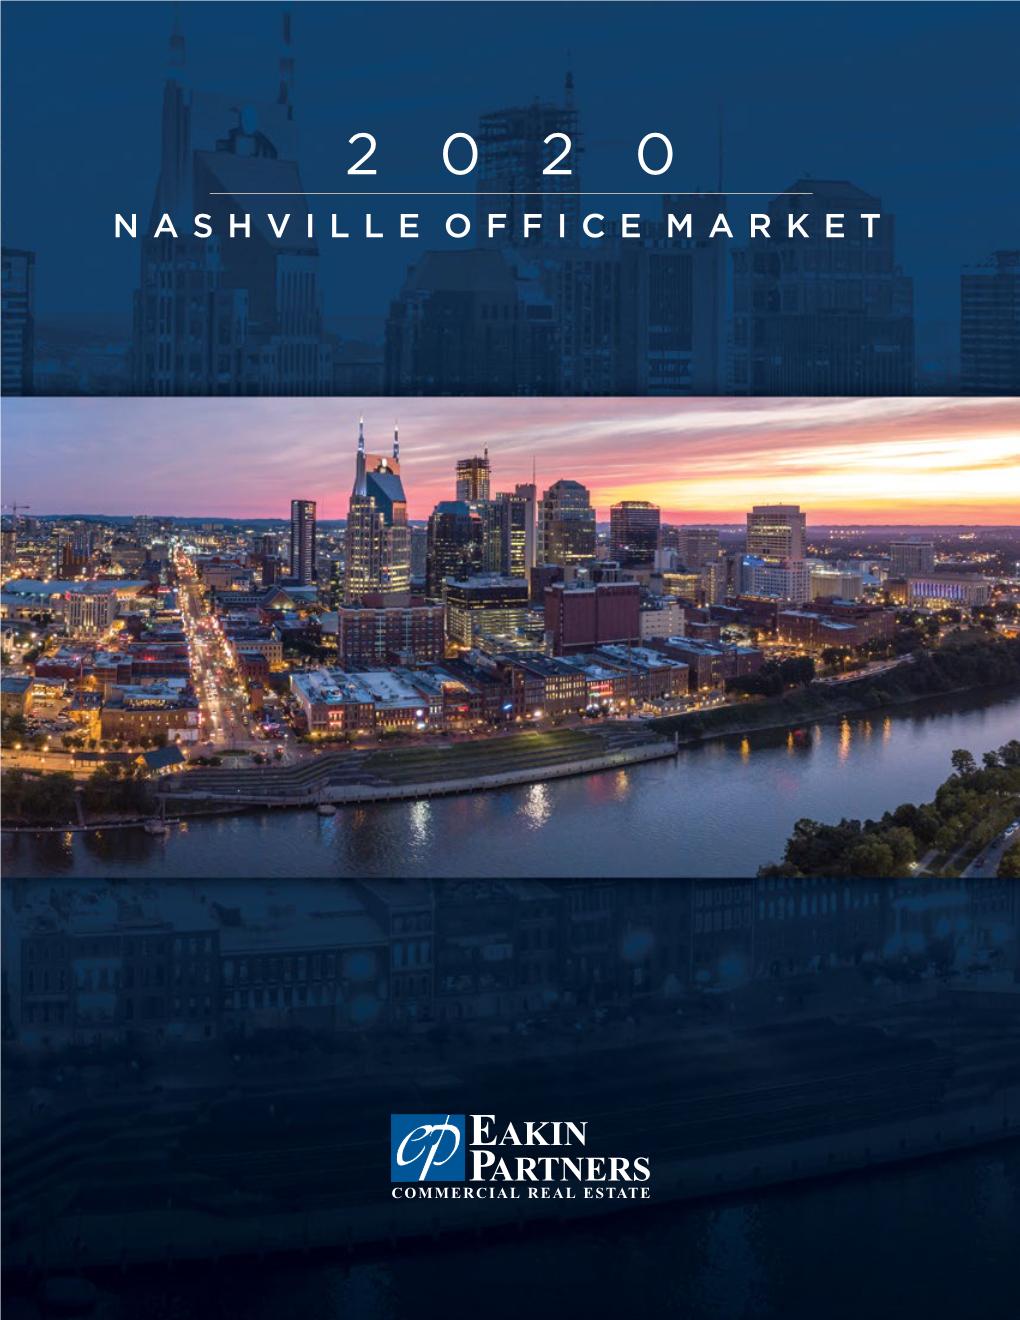 Nashville Office Market Eakin Partners Commercial Real Estate